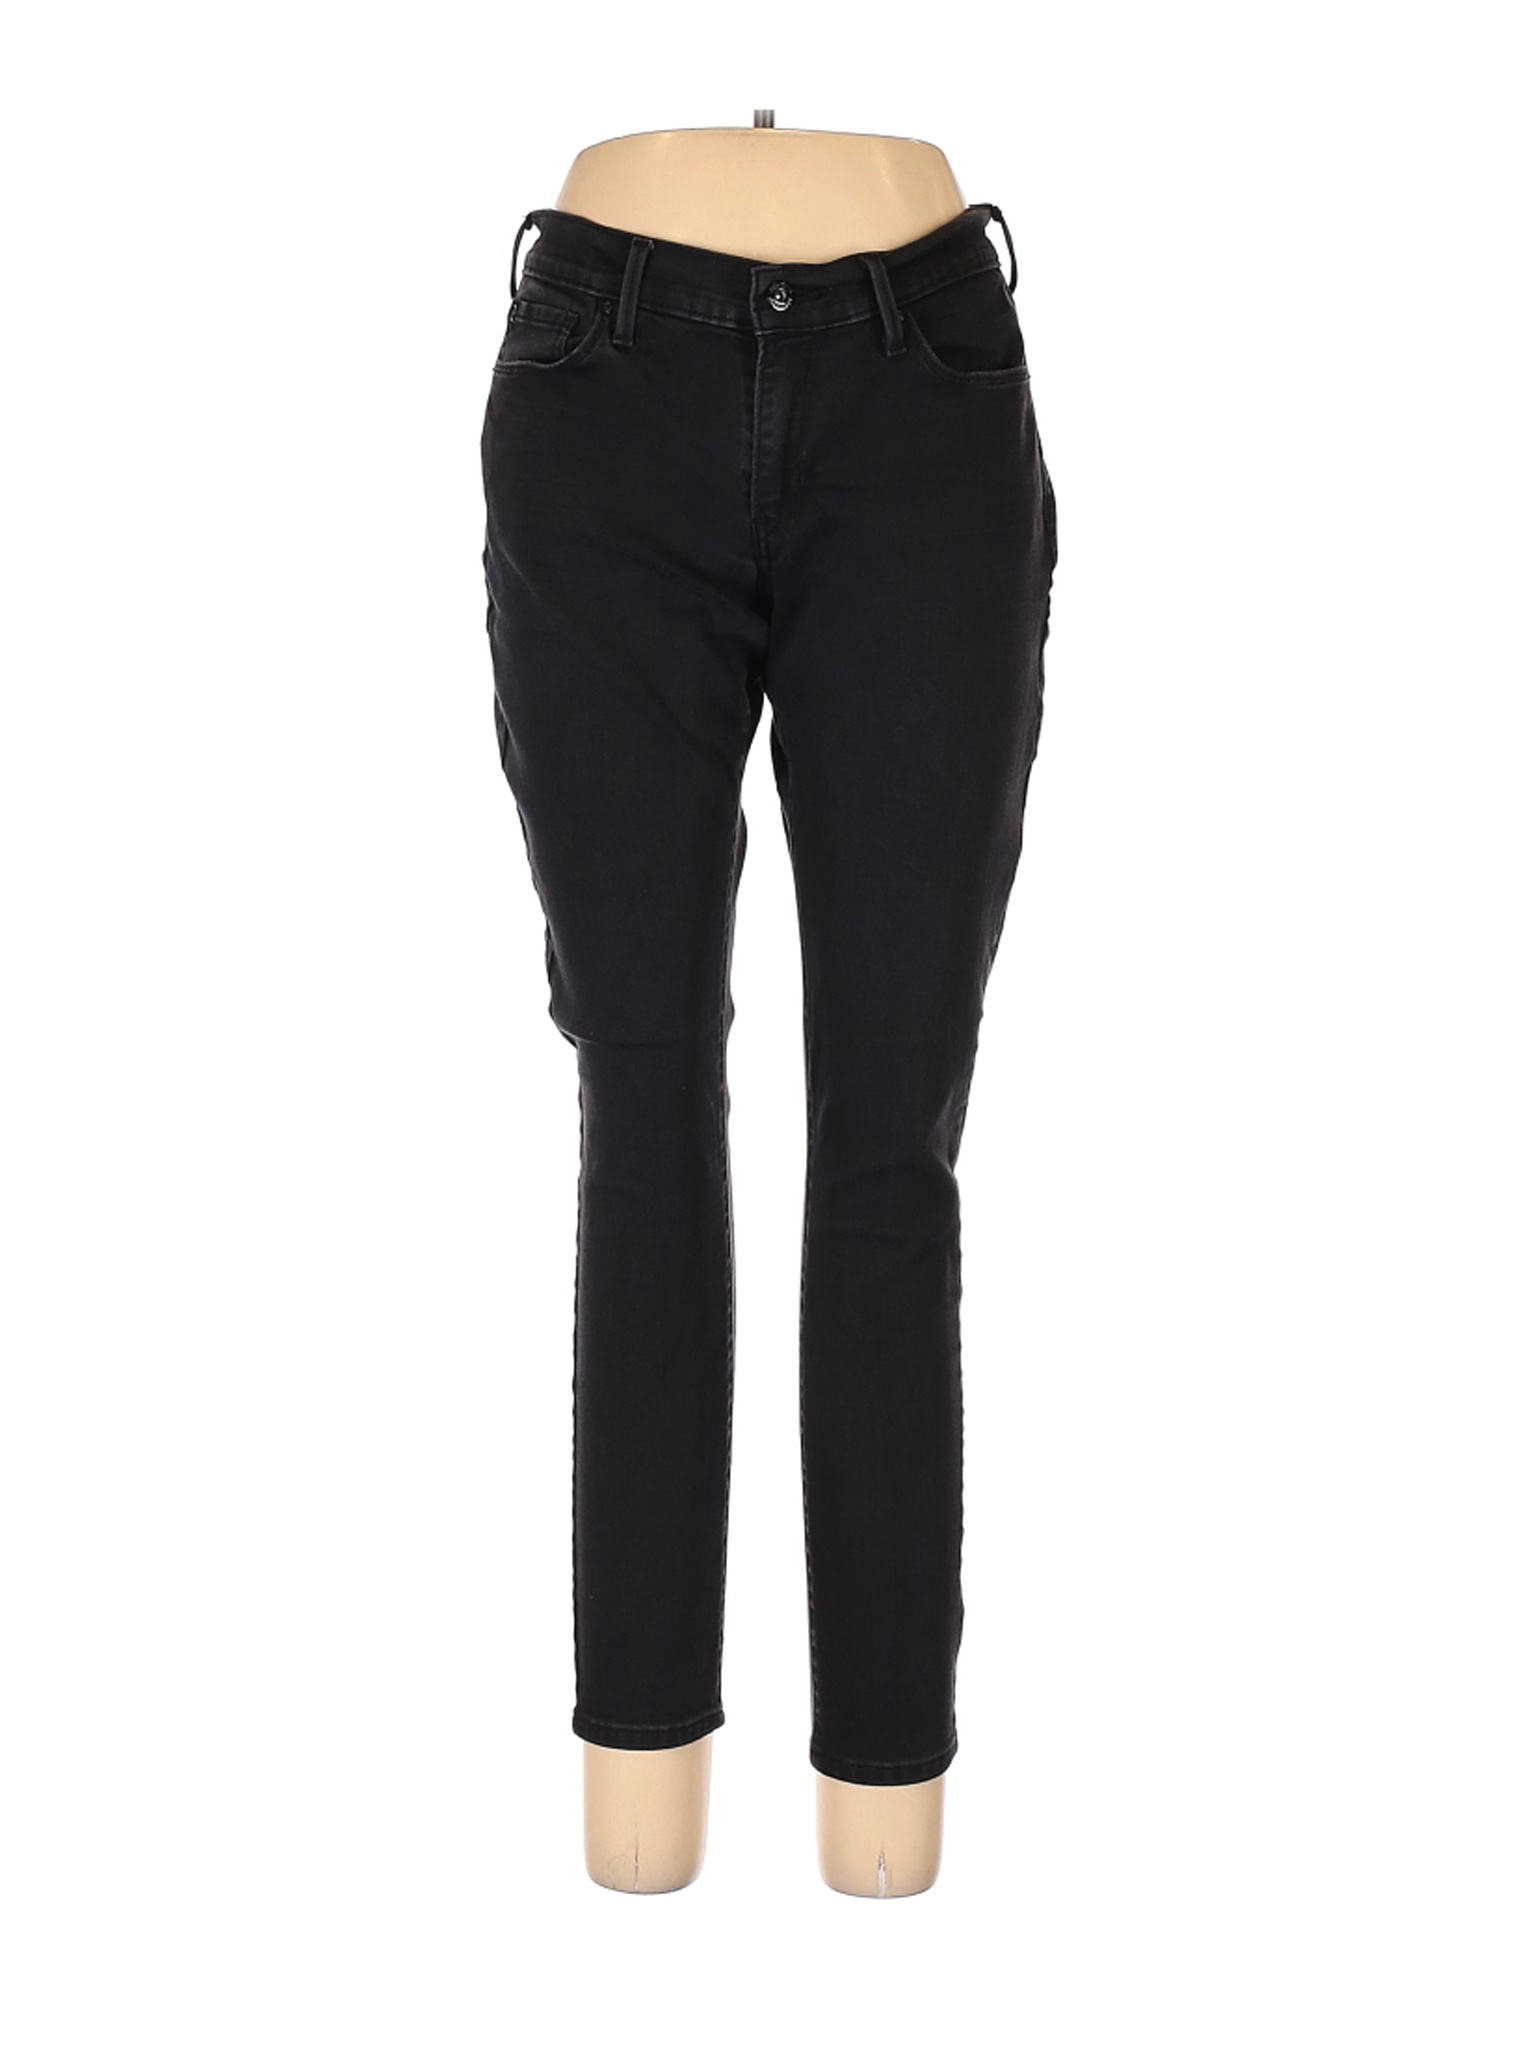 Denizen from Levi's Women Black Jeans 12 | eBay